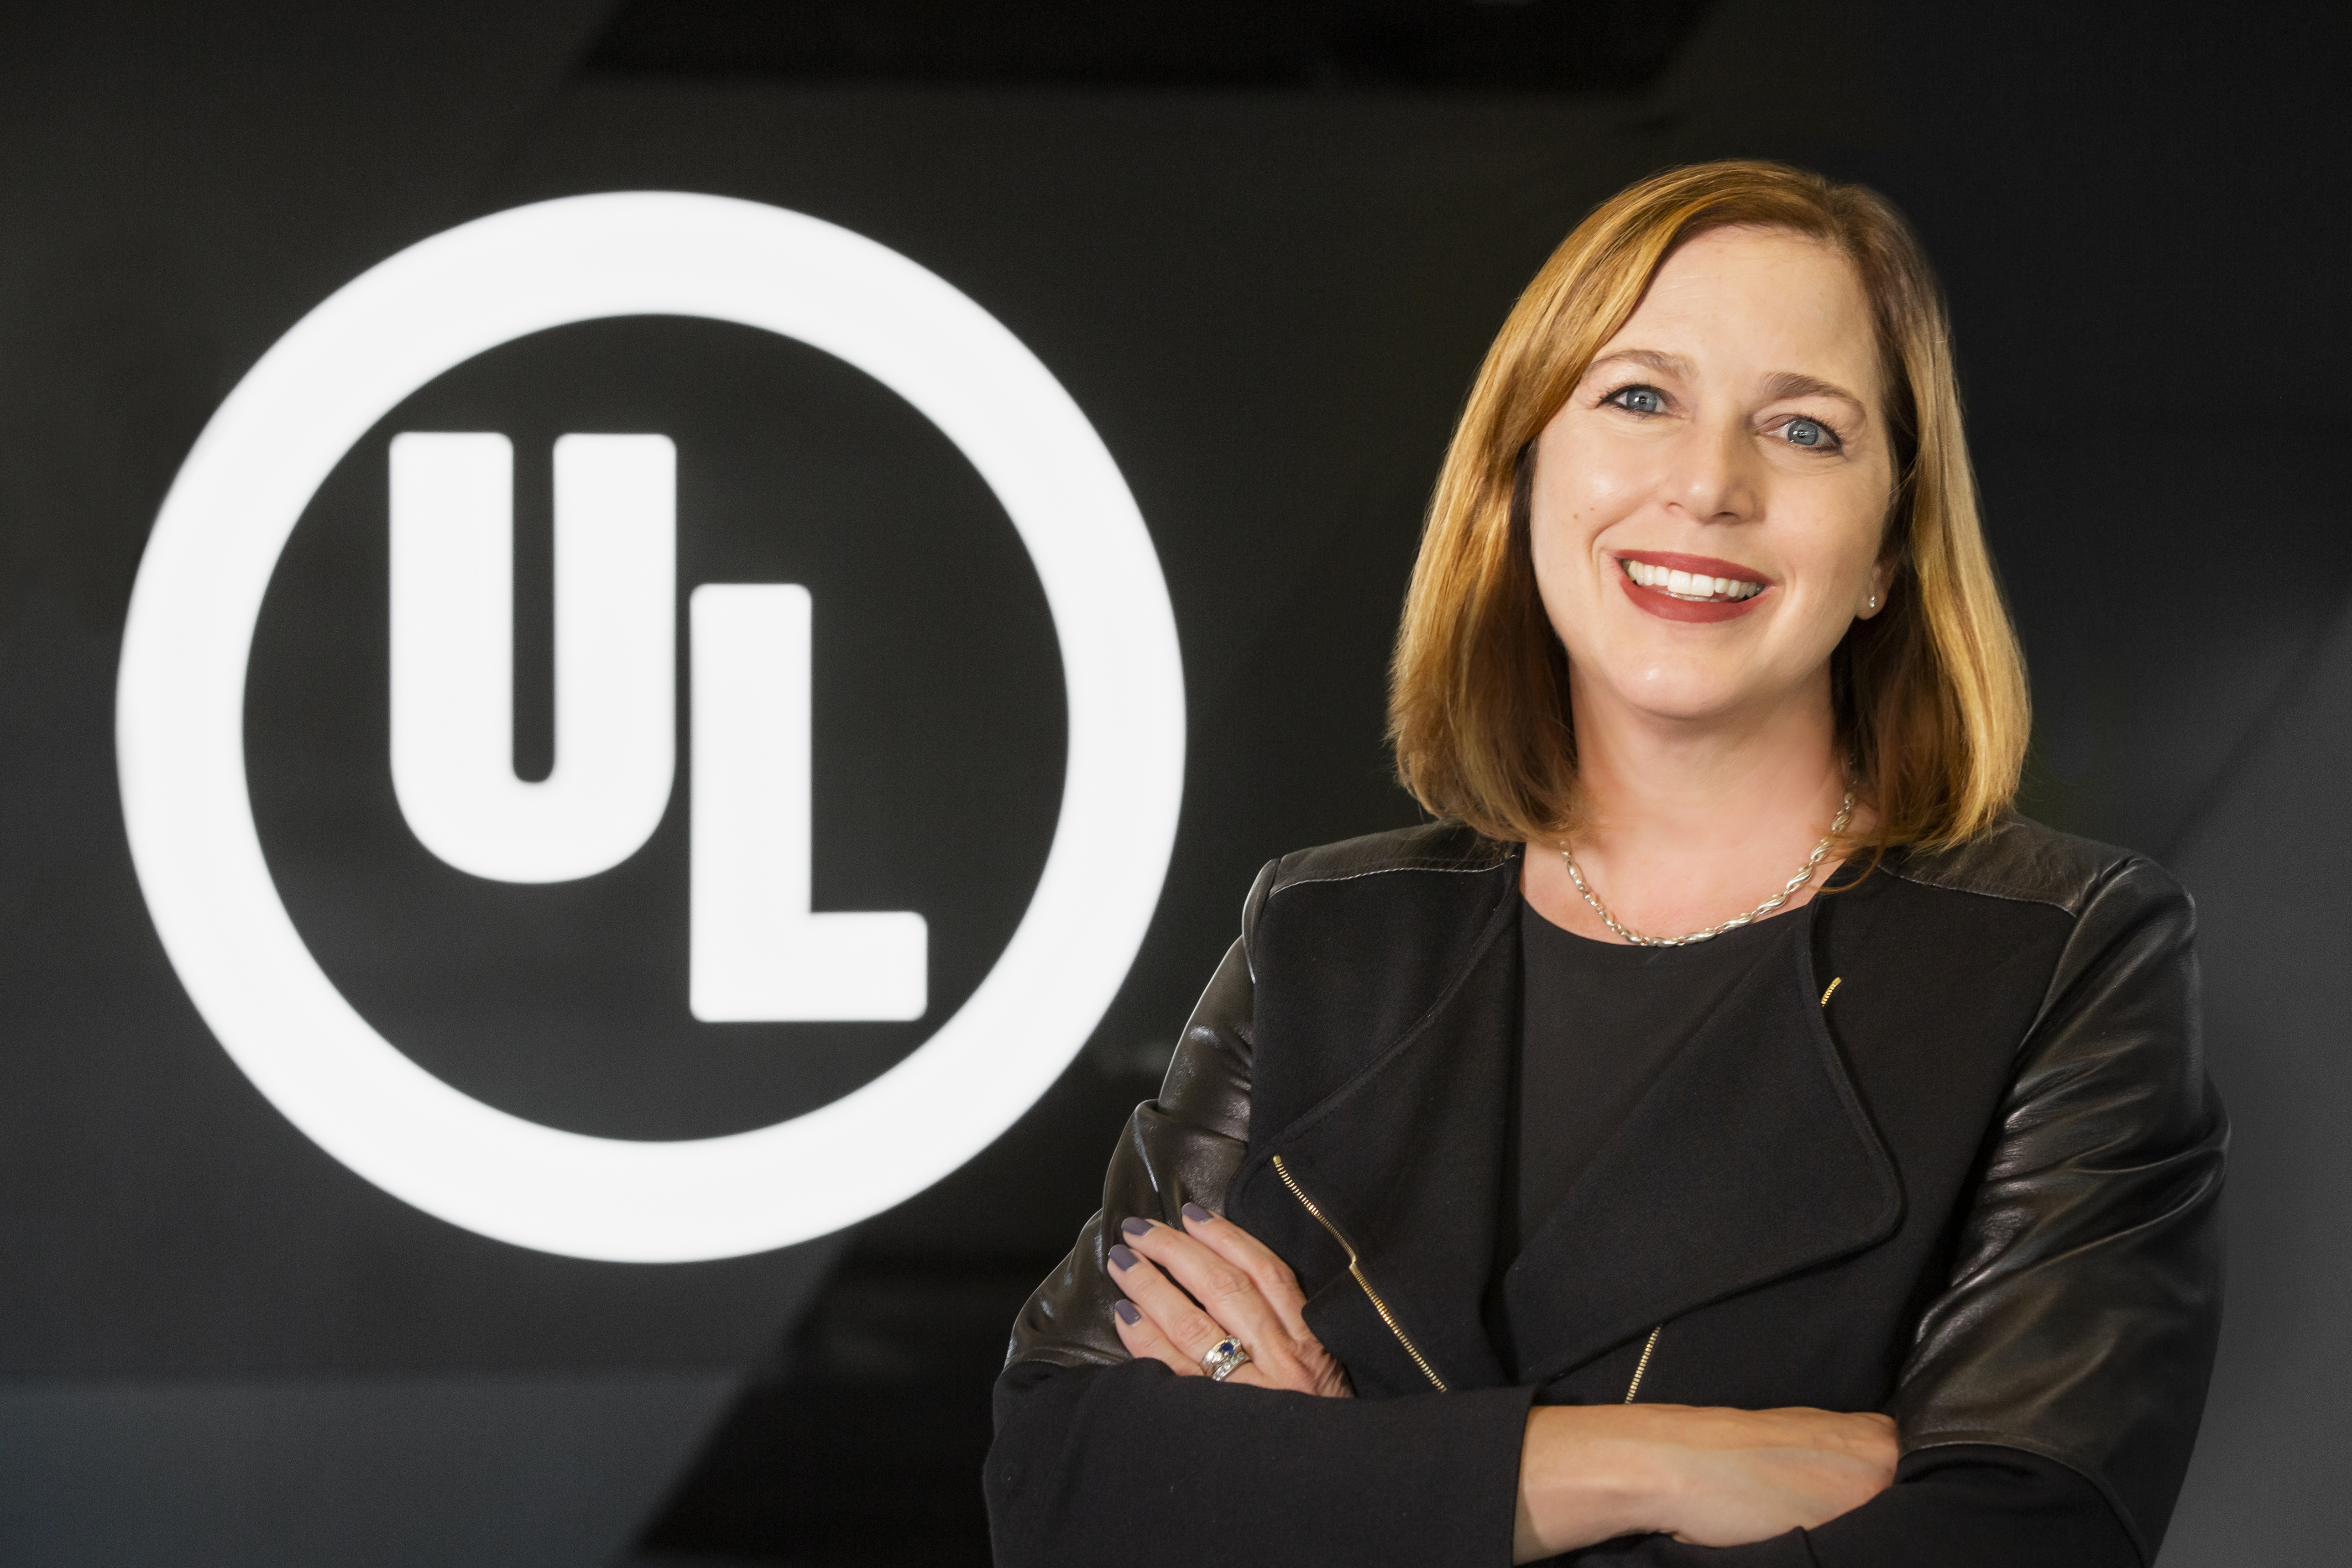 UL CEO Jennifer Scanlon